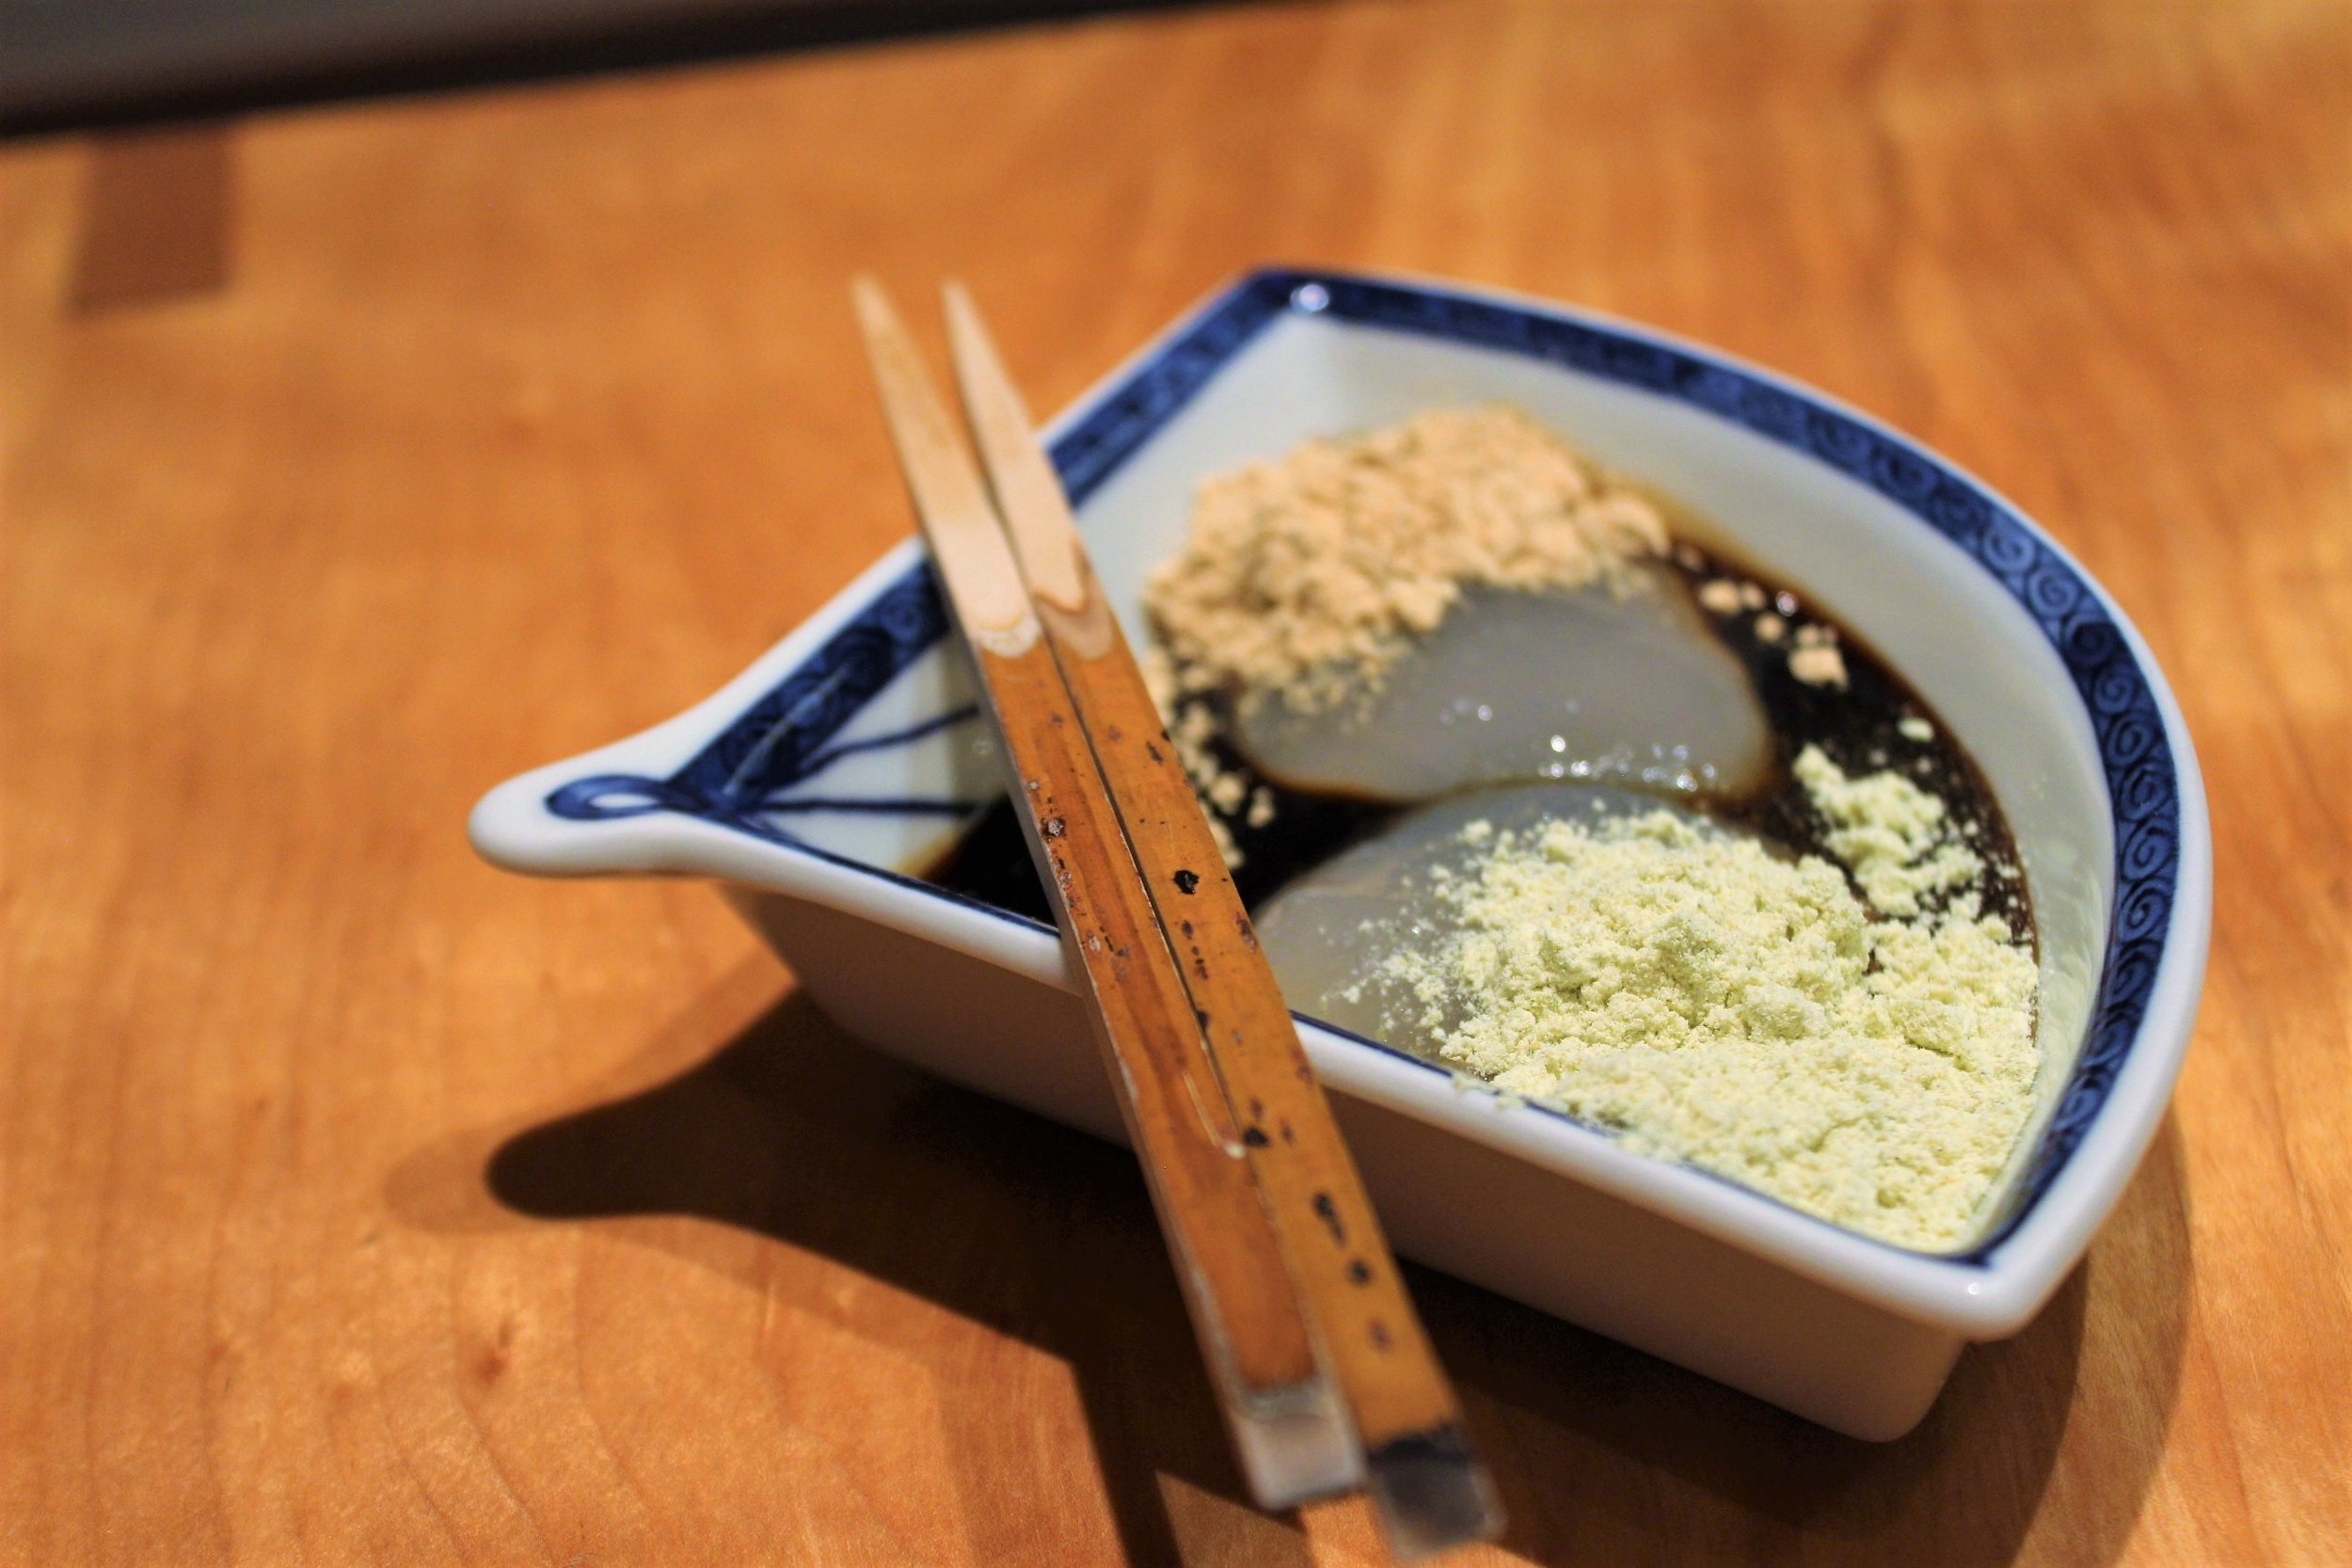 Warabi-mochi Bracken Starch Jelly covered in Kinako Toasted Soybean Flour